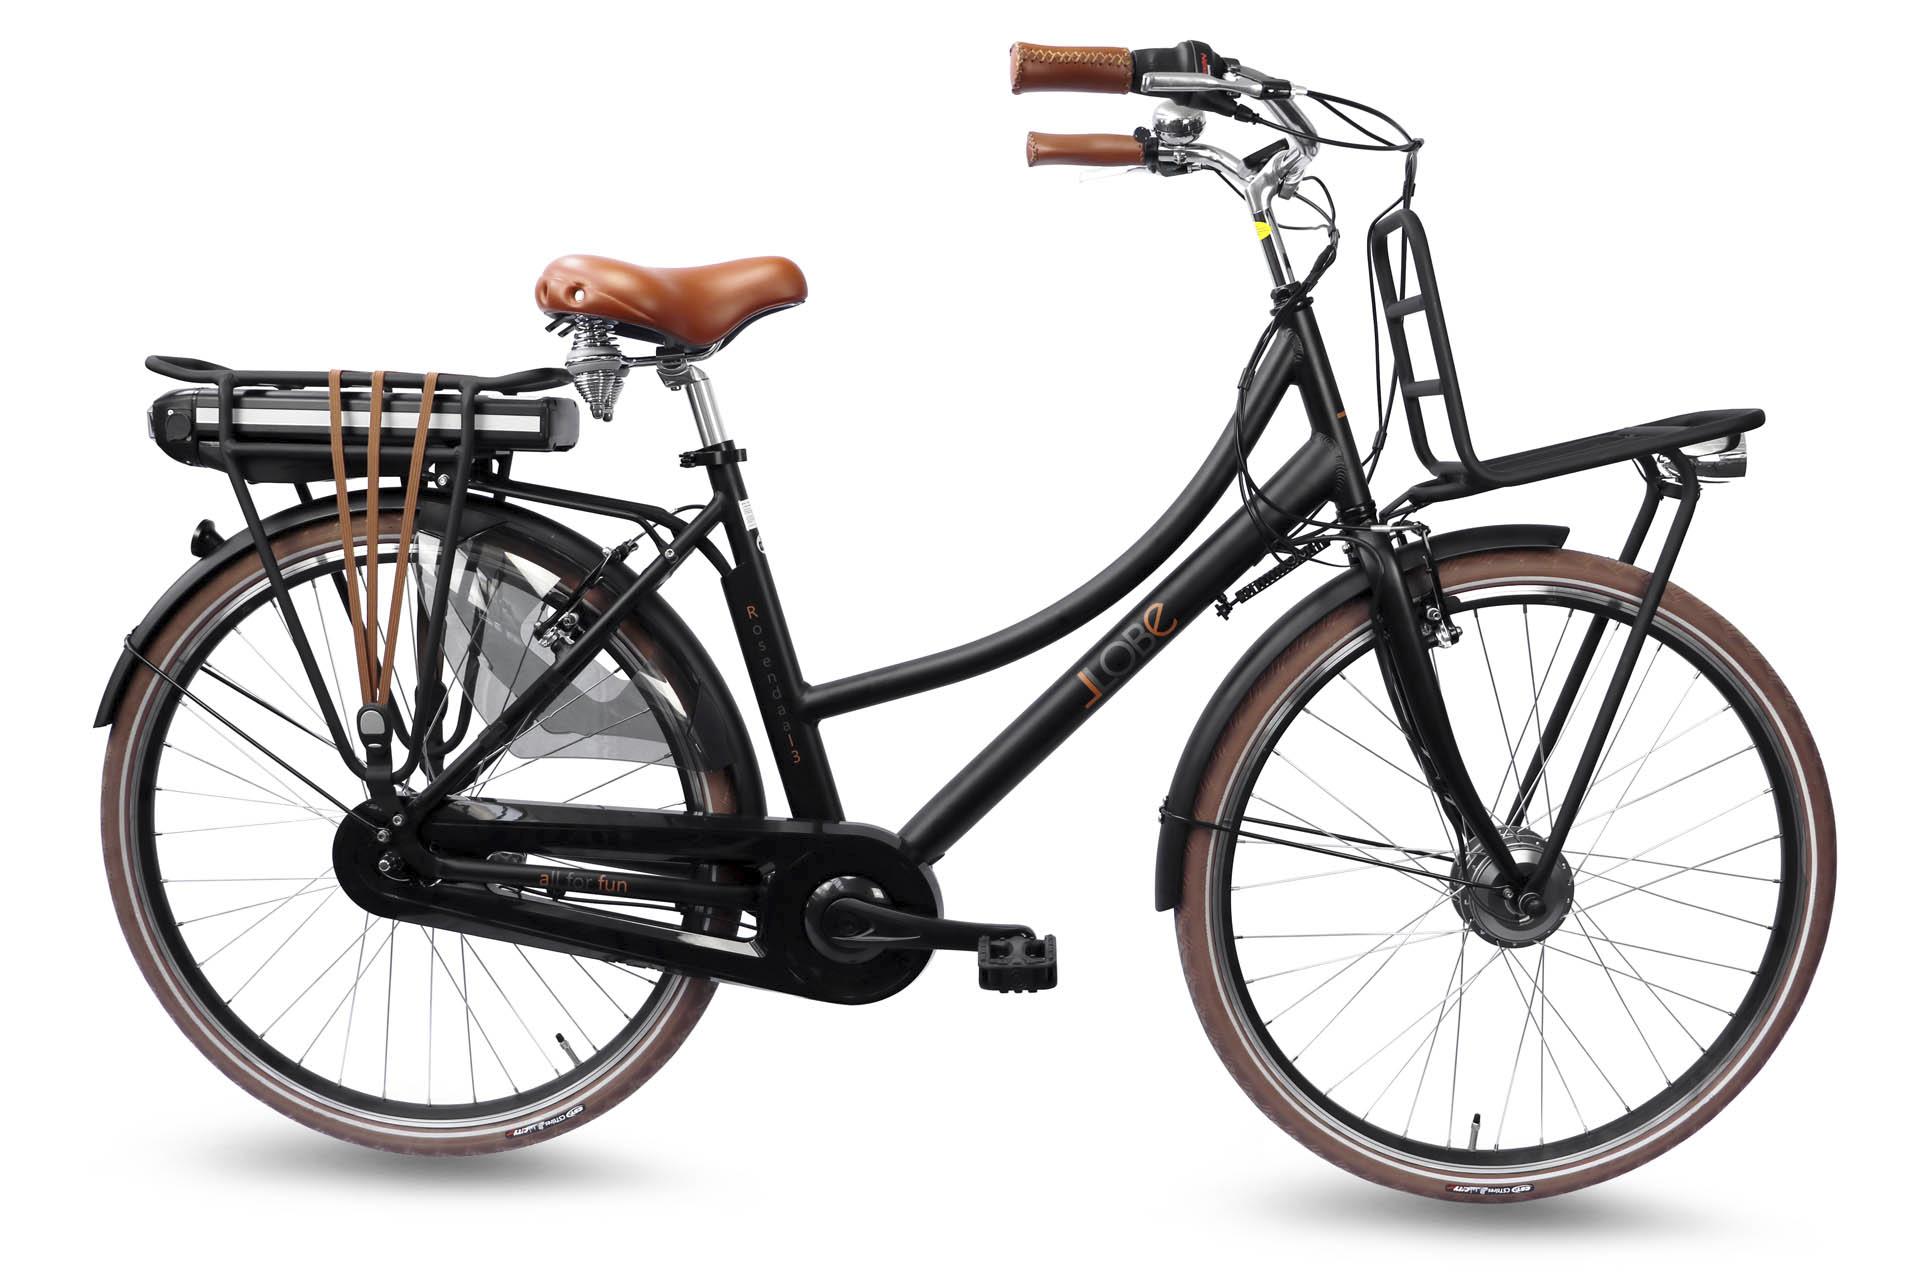 Llobe Damen City E-Bike, 28 Zoll, Rahmenhöhe 50 cm, 7-Gang Nabenschaltung, schwarz, Rosendaal 3 Lady, 13Ah